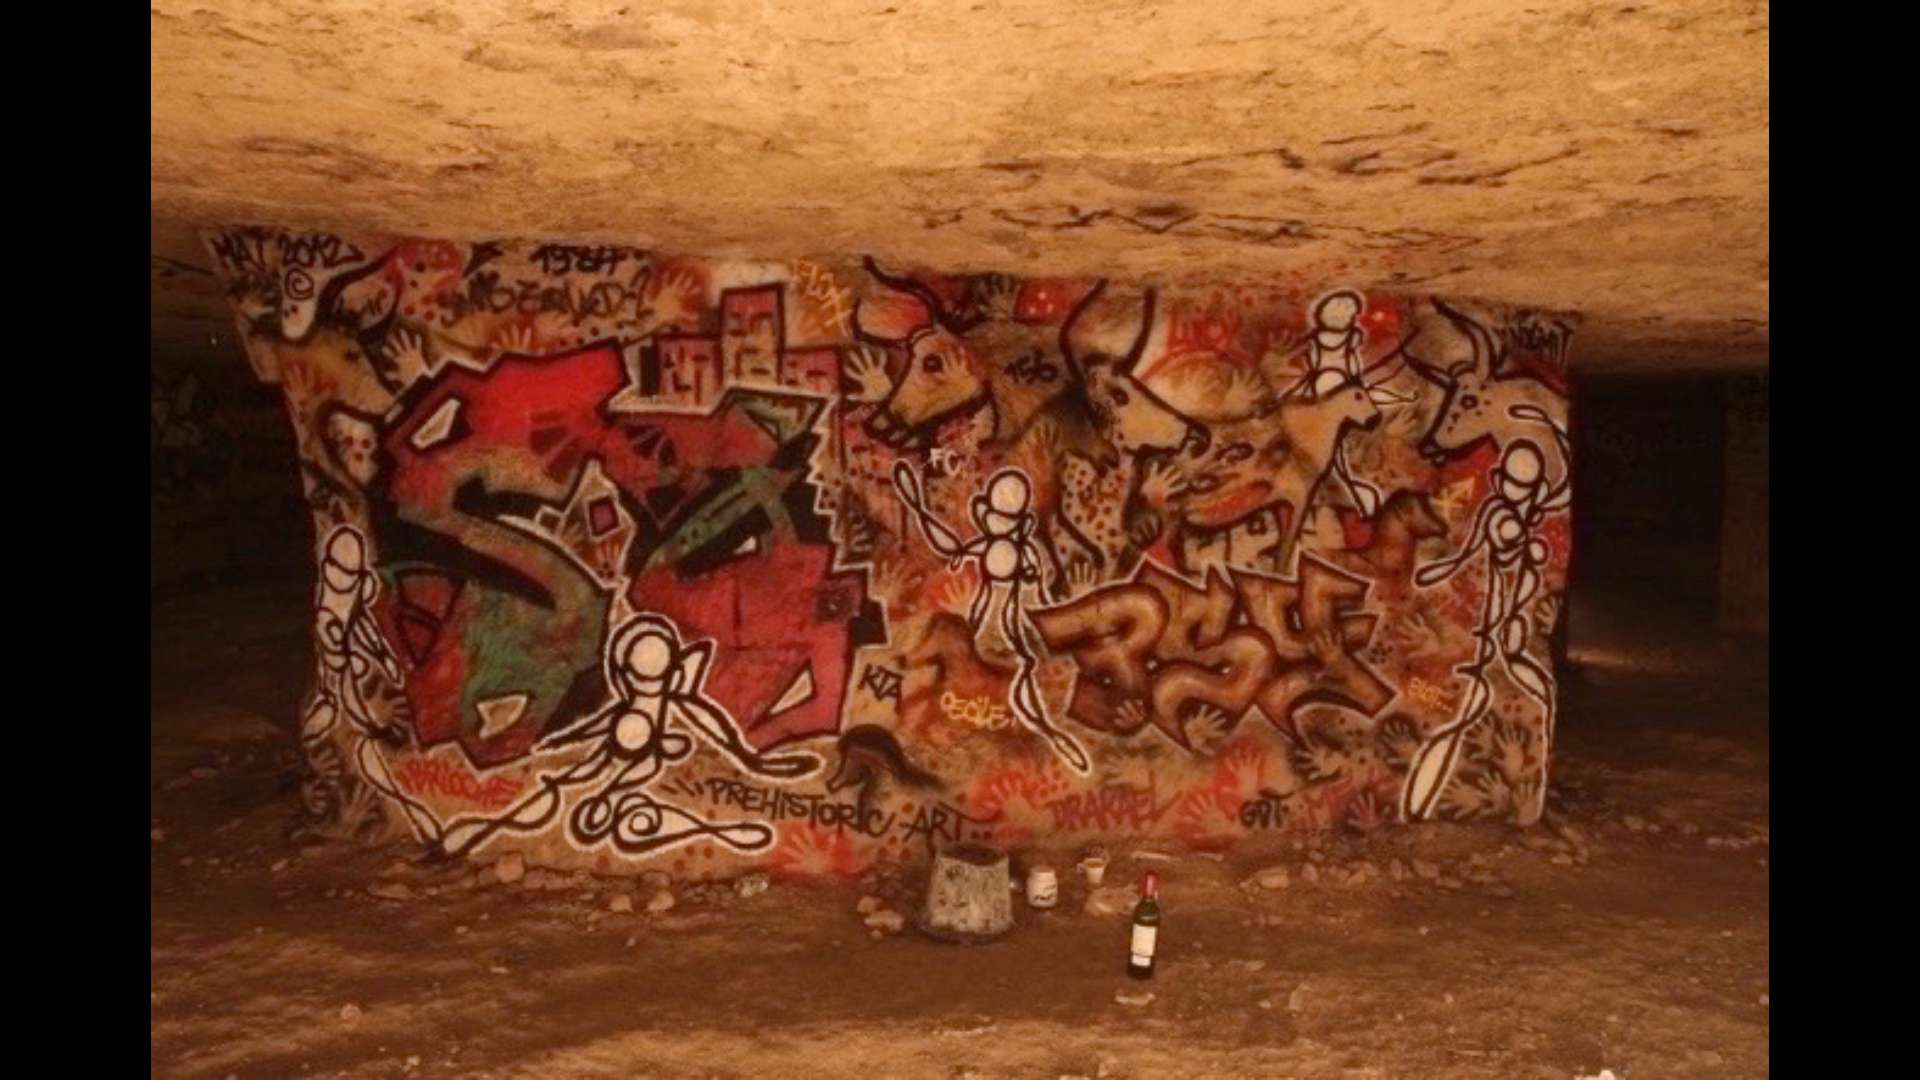 Alexandre Stolypine, alias Psychoze Nolimit, painting inspired by Lascaux, 2016. Paris, catacombs.